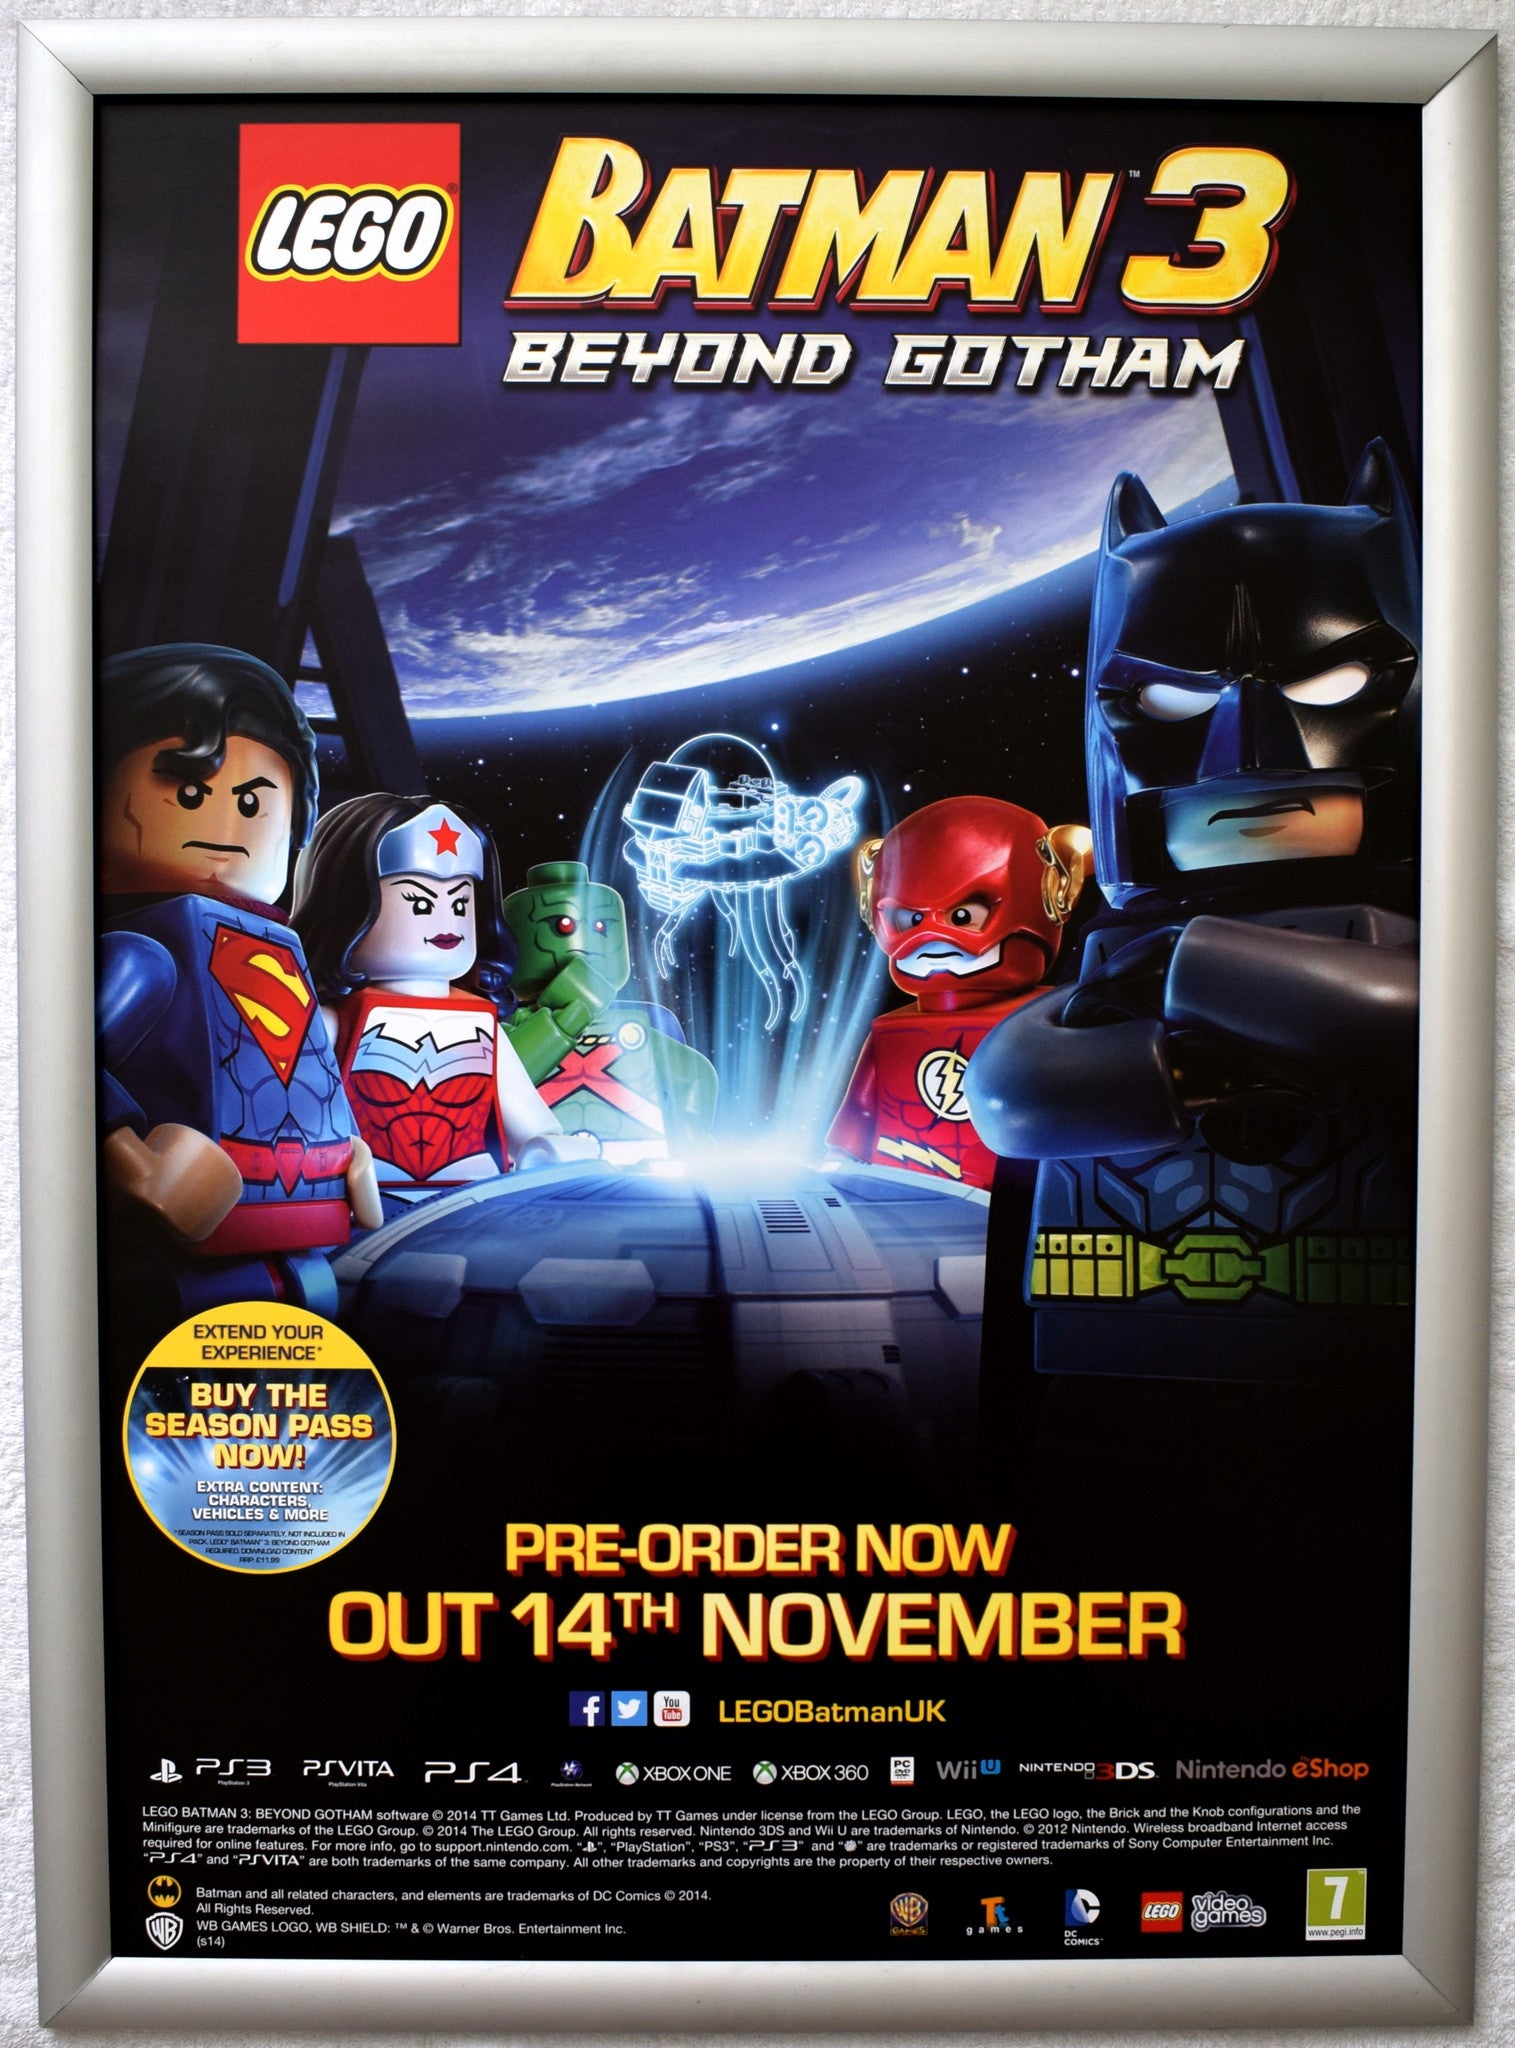 Batman 3 (Lego) Beyond Gotham (A2) Promotional Poster #1